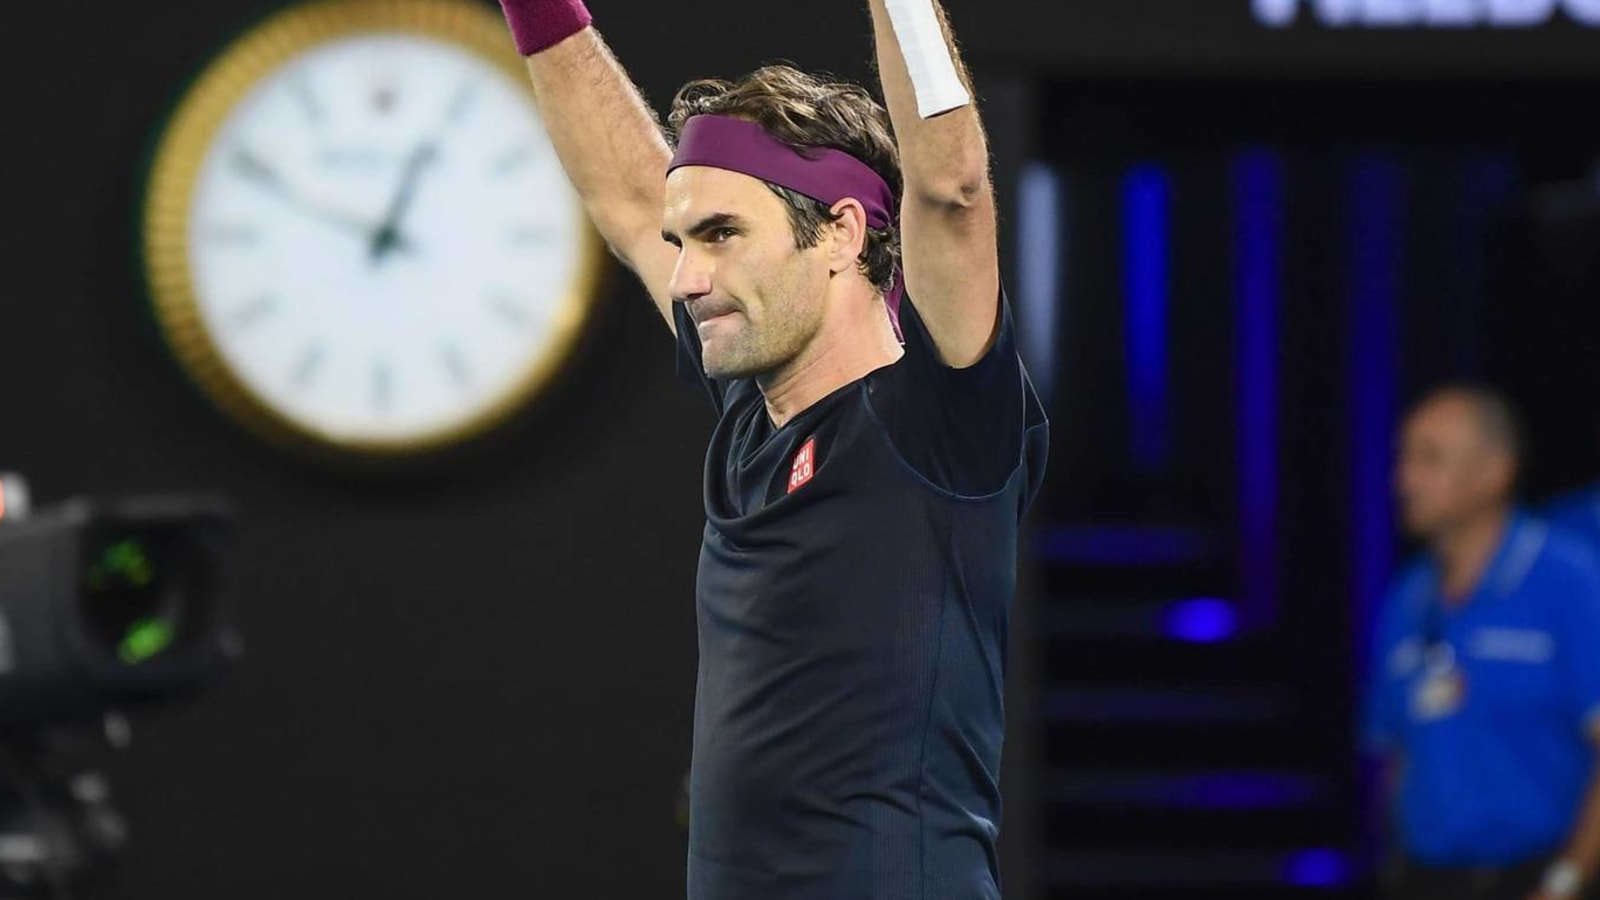 Roger Federer wins in return after 405-day layoff